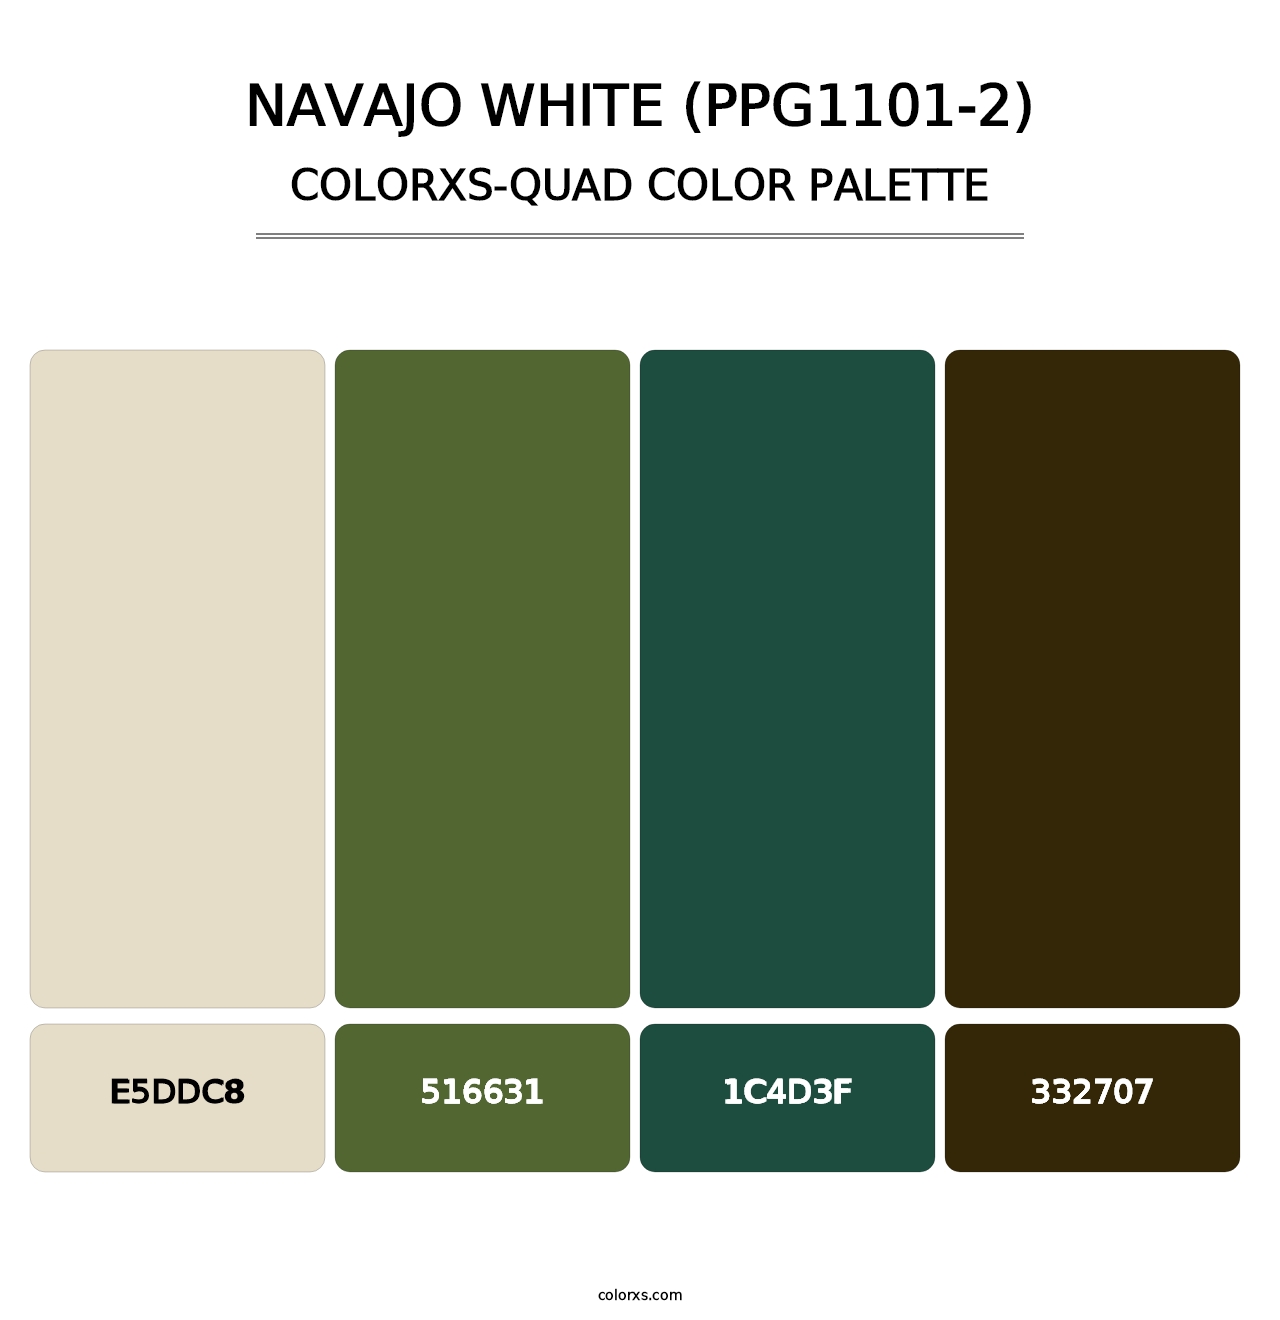 Navajo White (PPG1101-2) - Colorxs Quad Palette